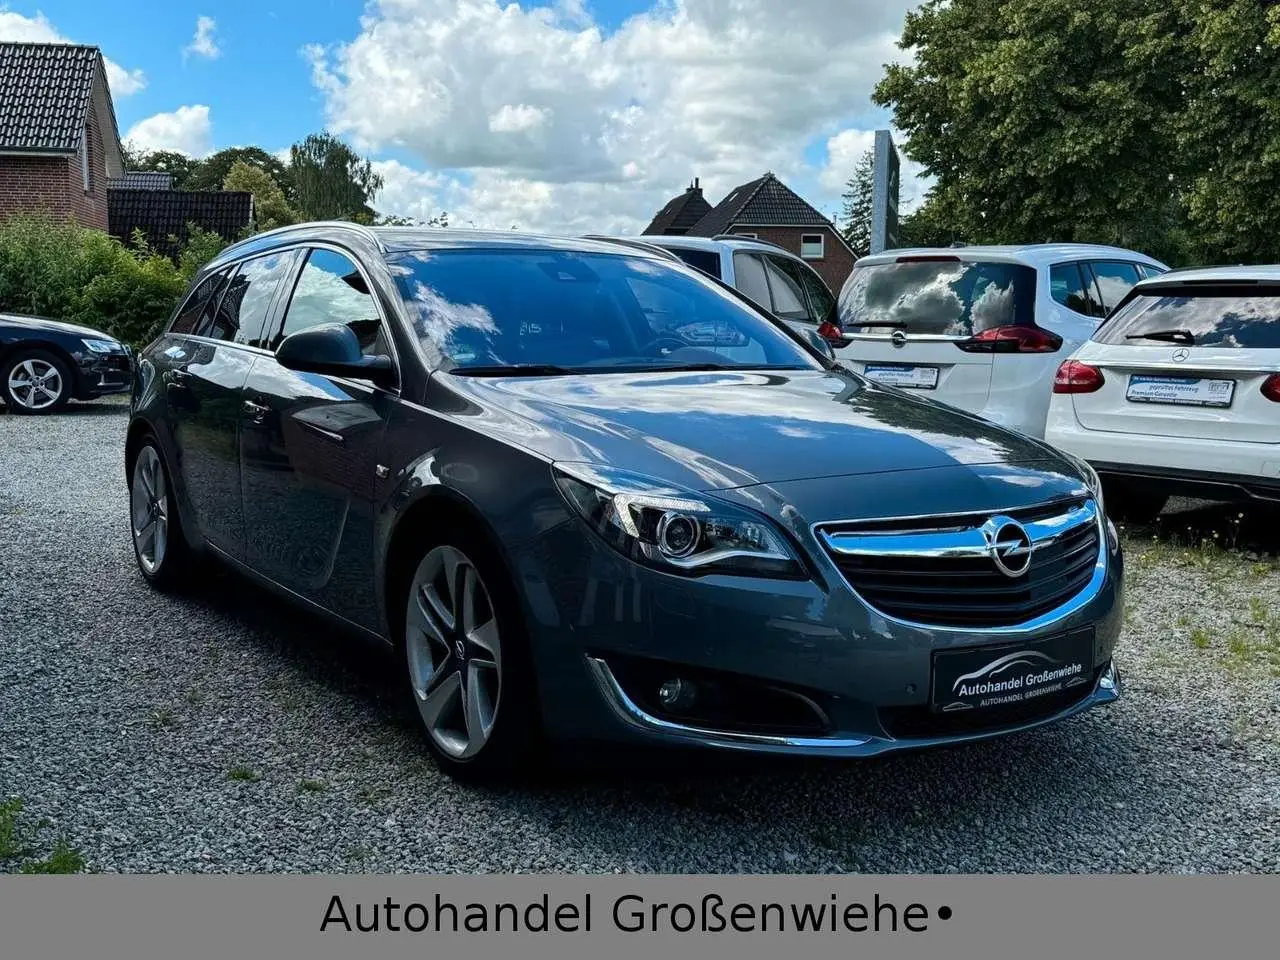 Photo 1 : Opel Insignia 2017 Diesel